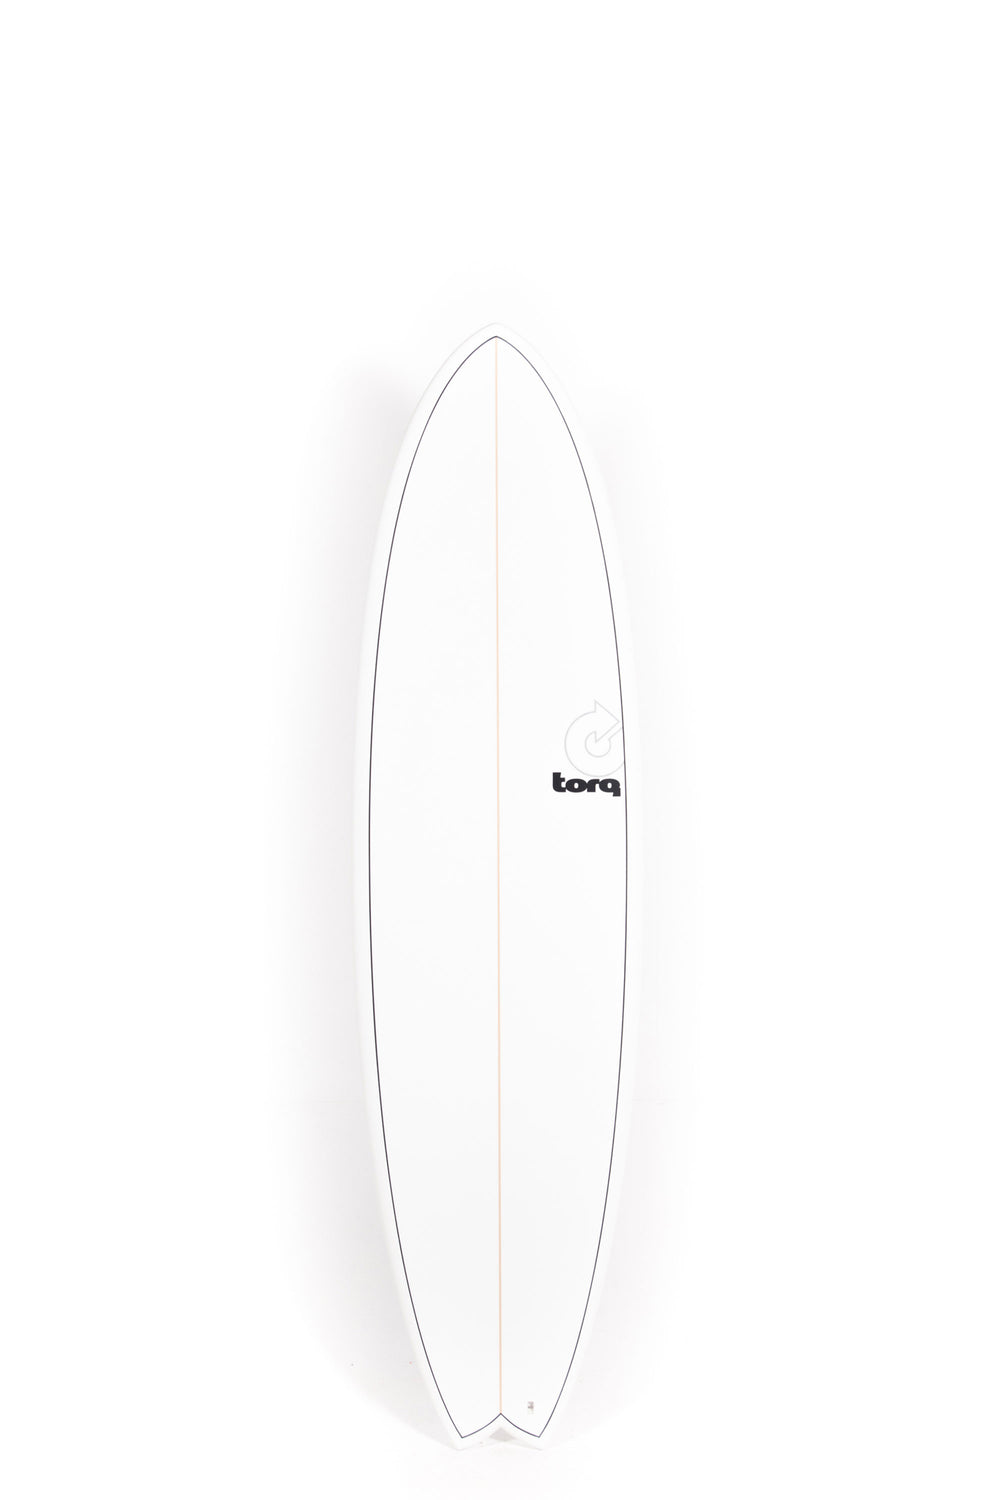 Pukas Surf Shop - Torq Surfboards - MODFISH - 7'2